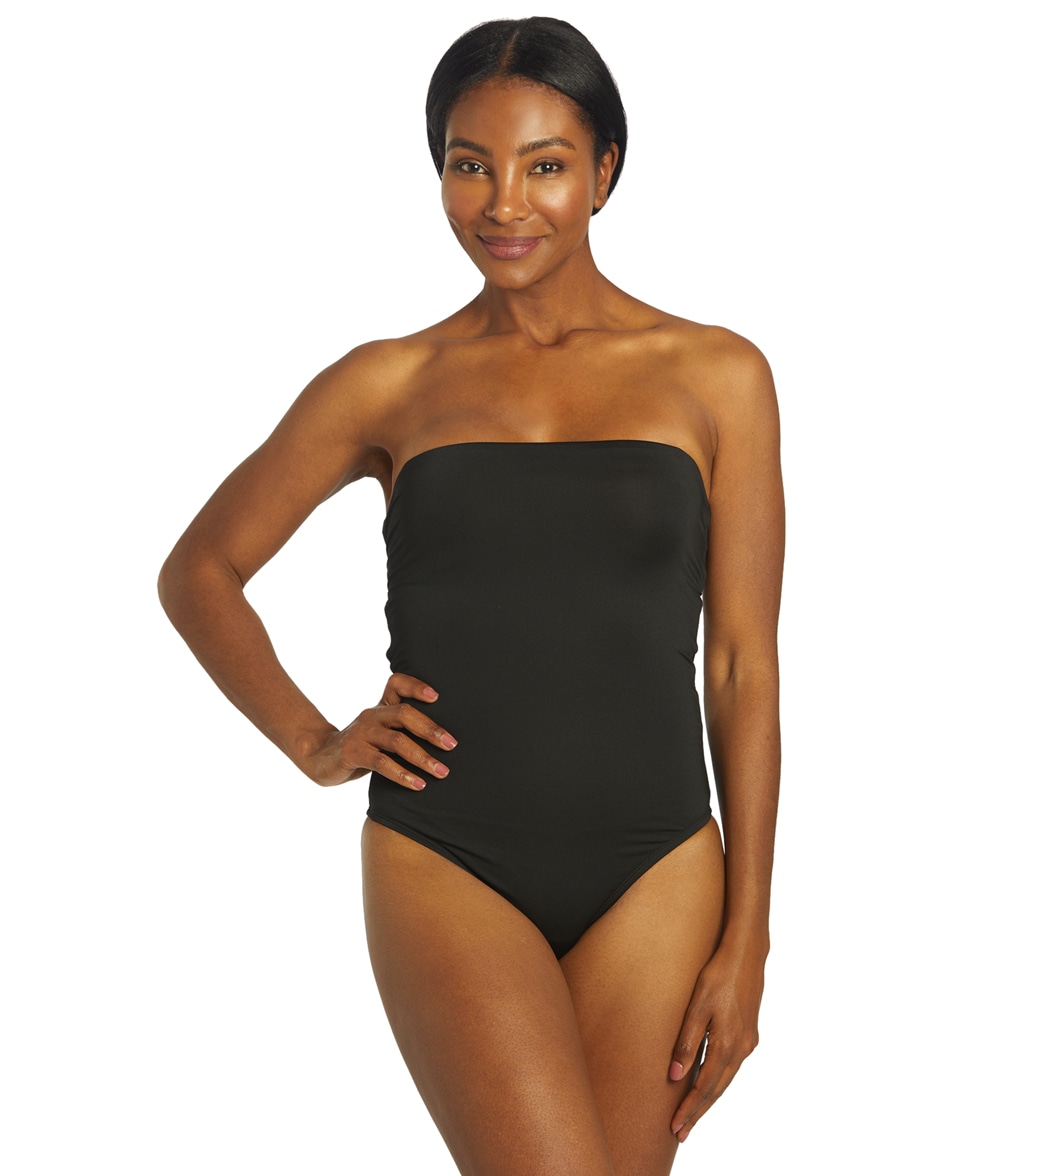 Nike Women's Solid Lace-Up Back Bandeau One Piece Swimsuit - Black Large - Swimoutlet.com